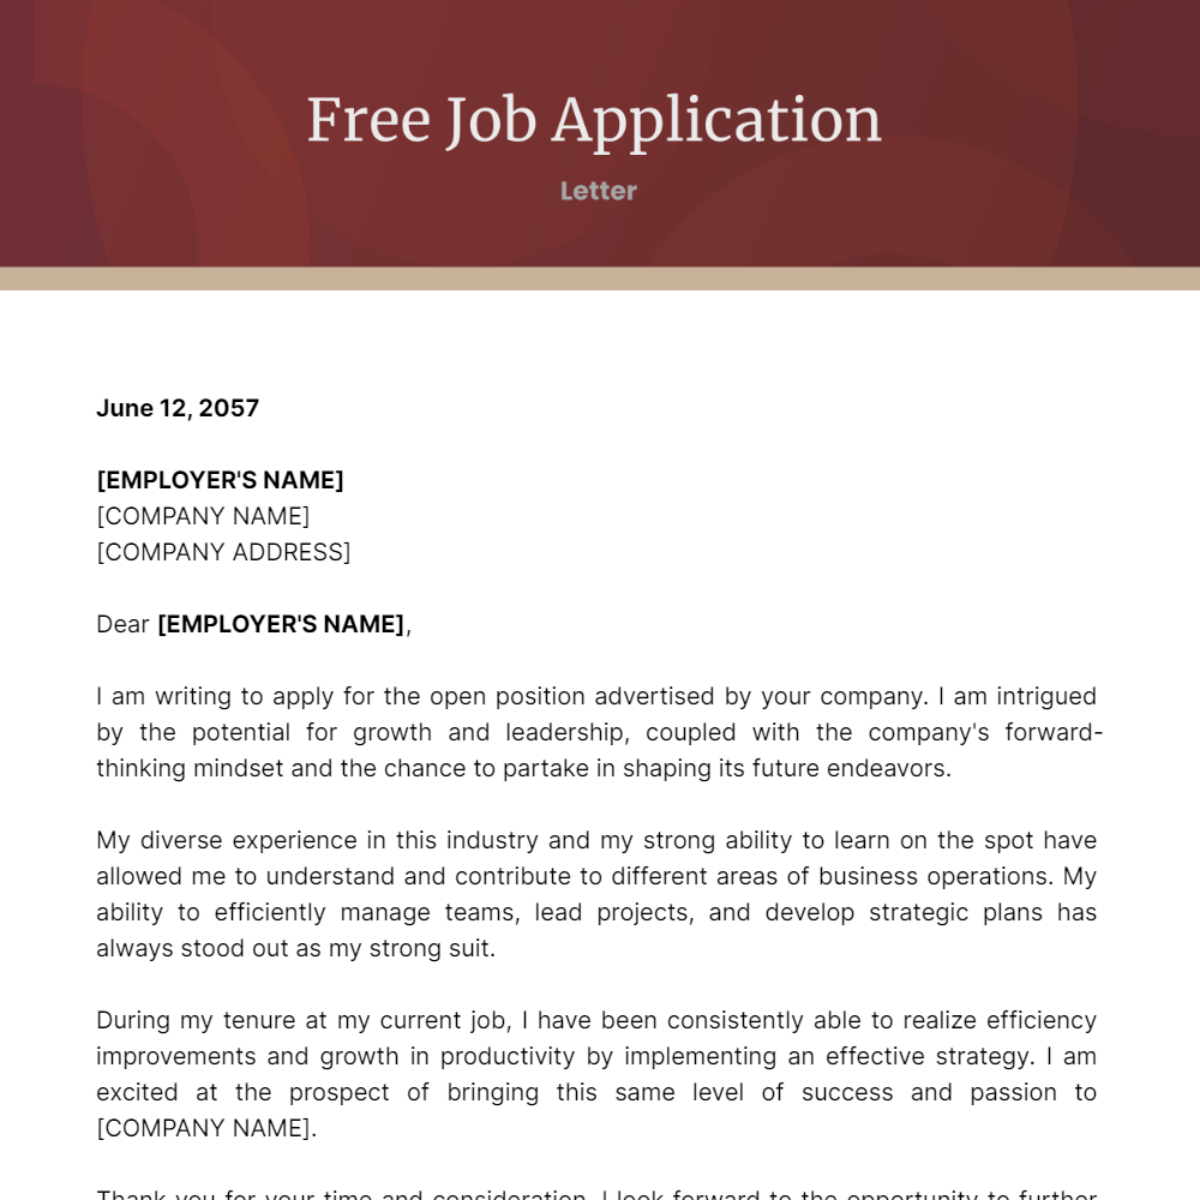 Job Application Letter Template